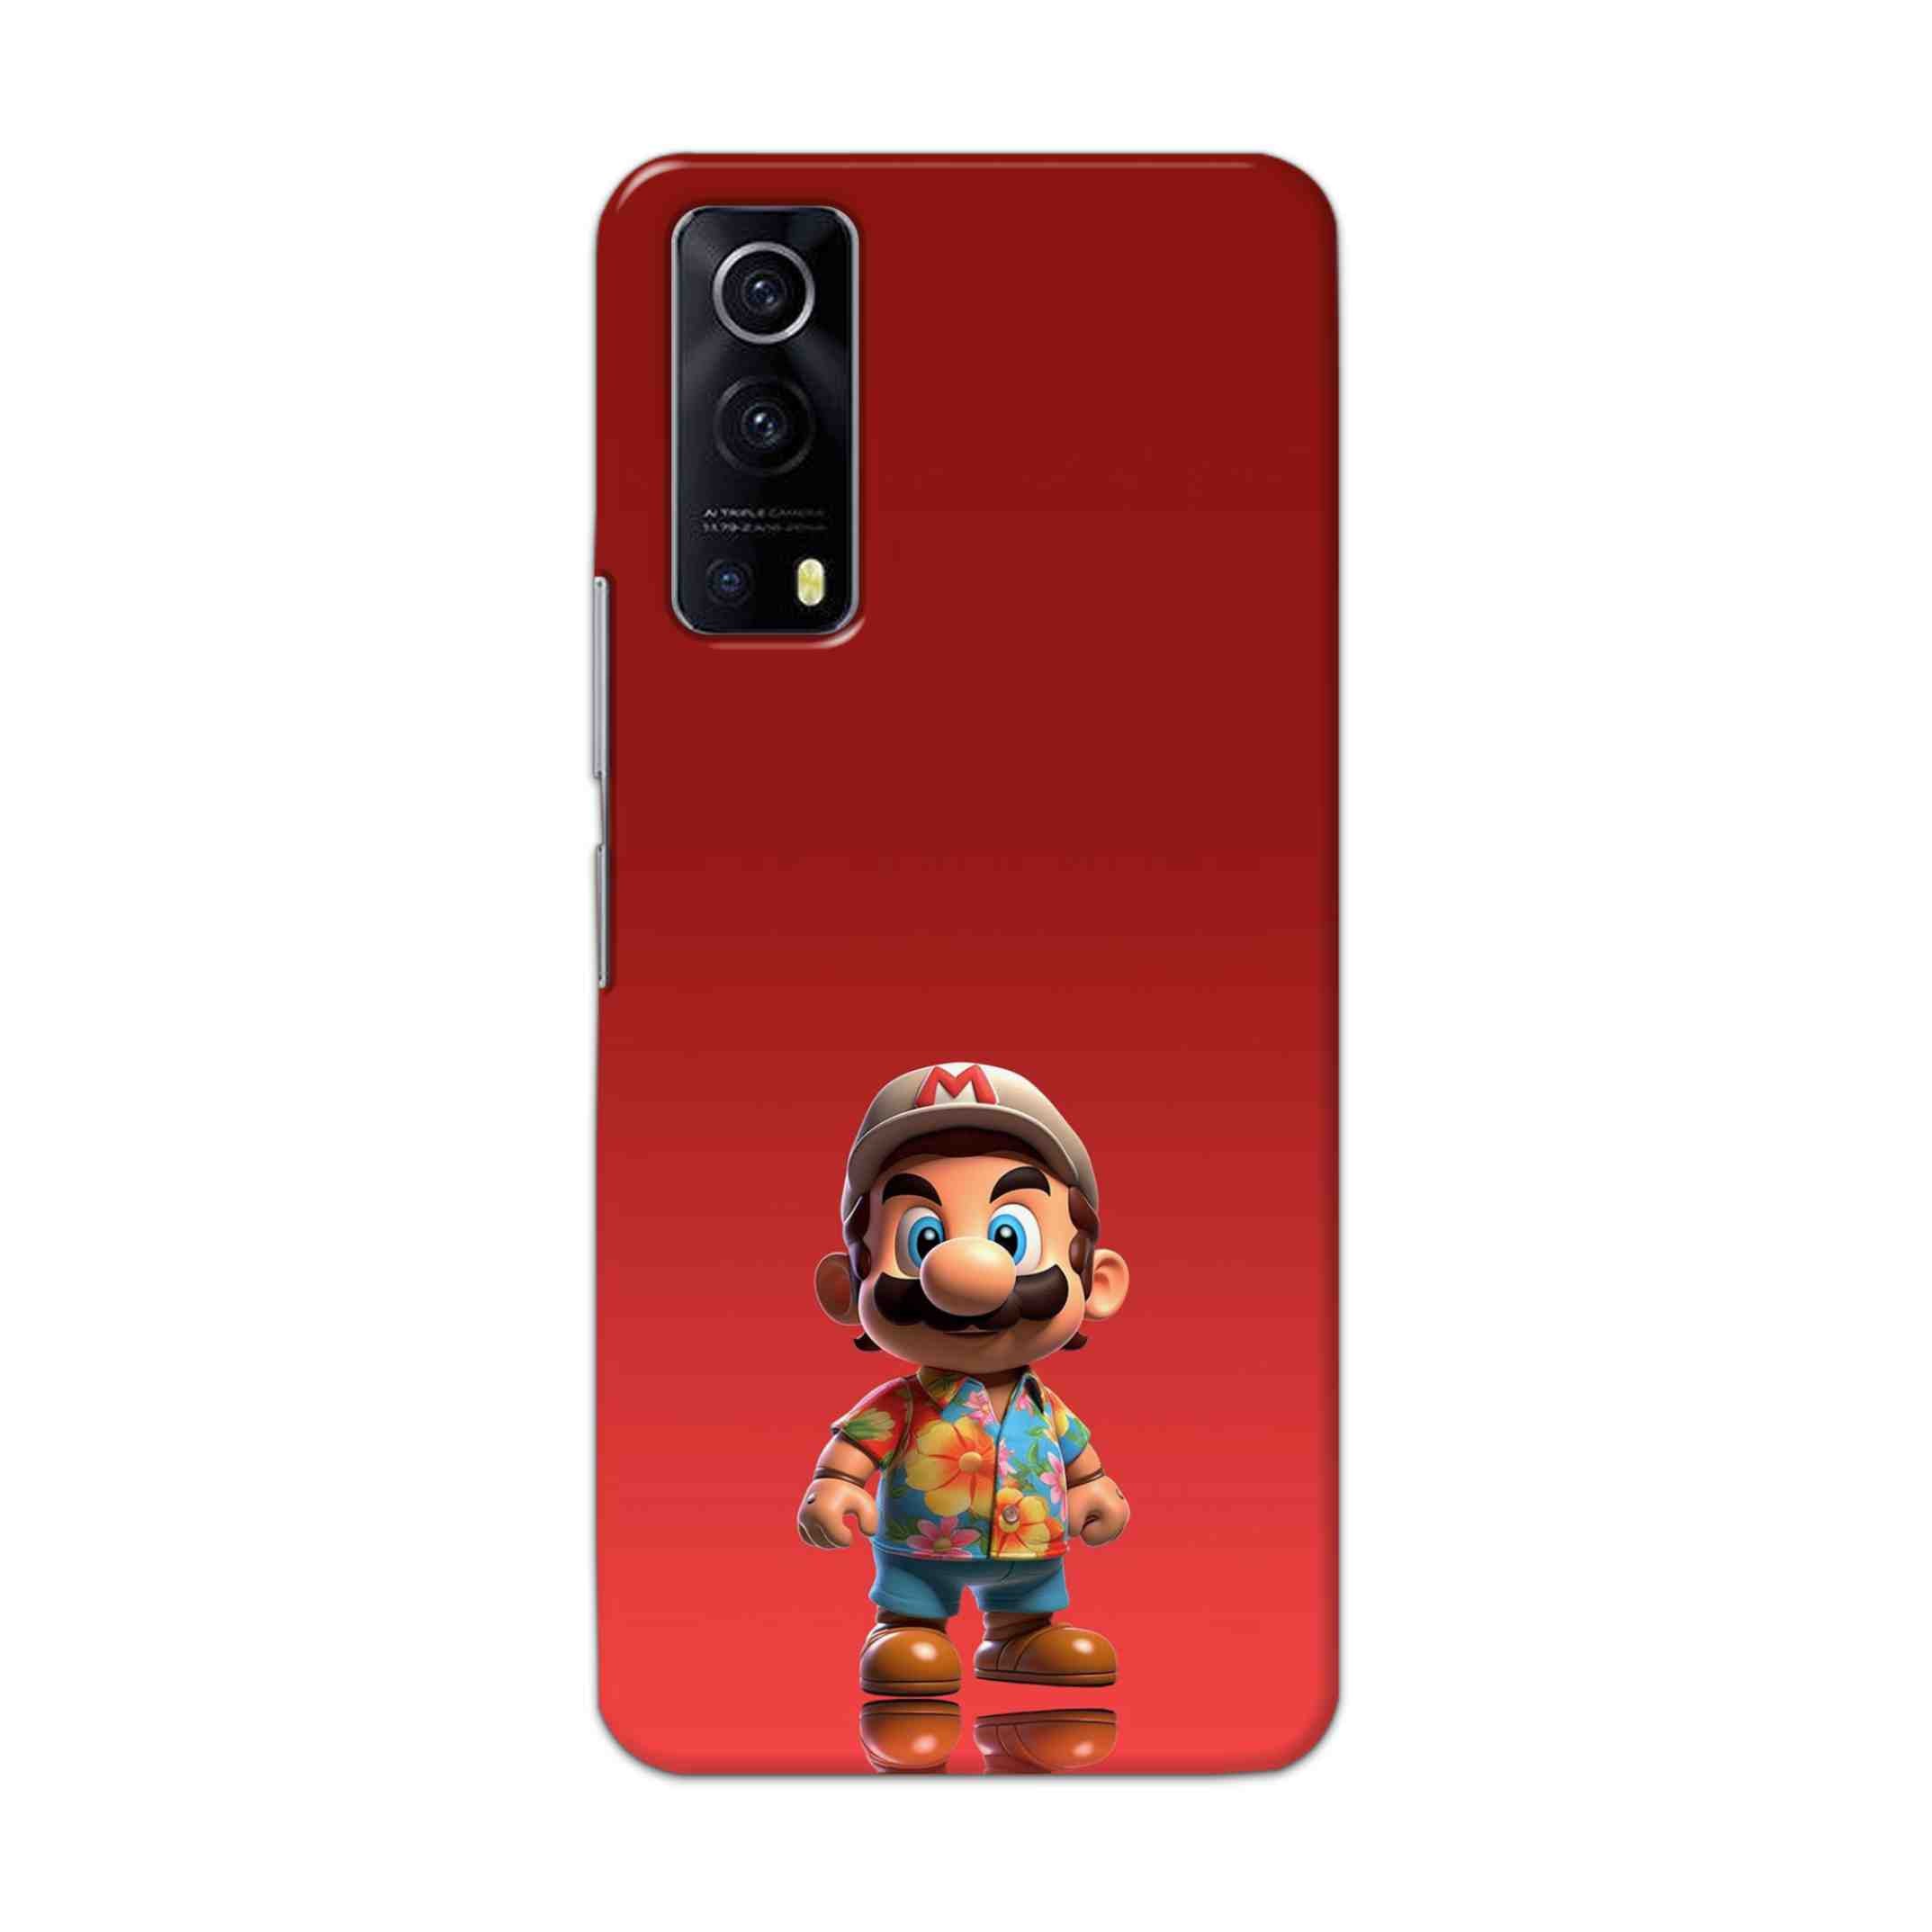 Buy Mario Hard Back Mobile Phone Case Cover For Vivo IQOO Z3 Online